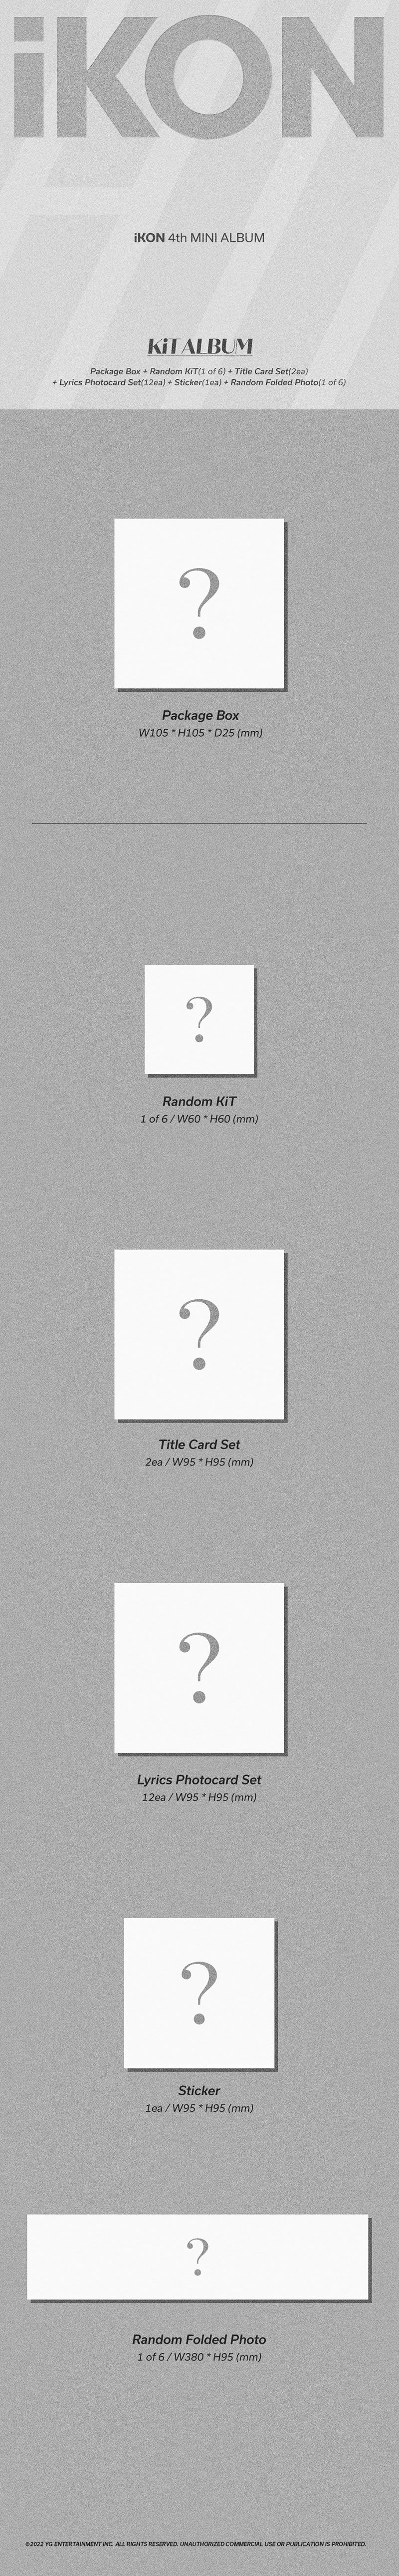 ikon - kit Flashback (4to mini álbum)